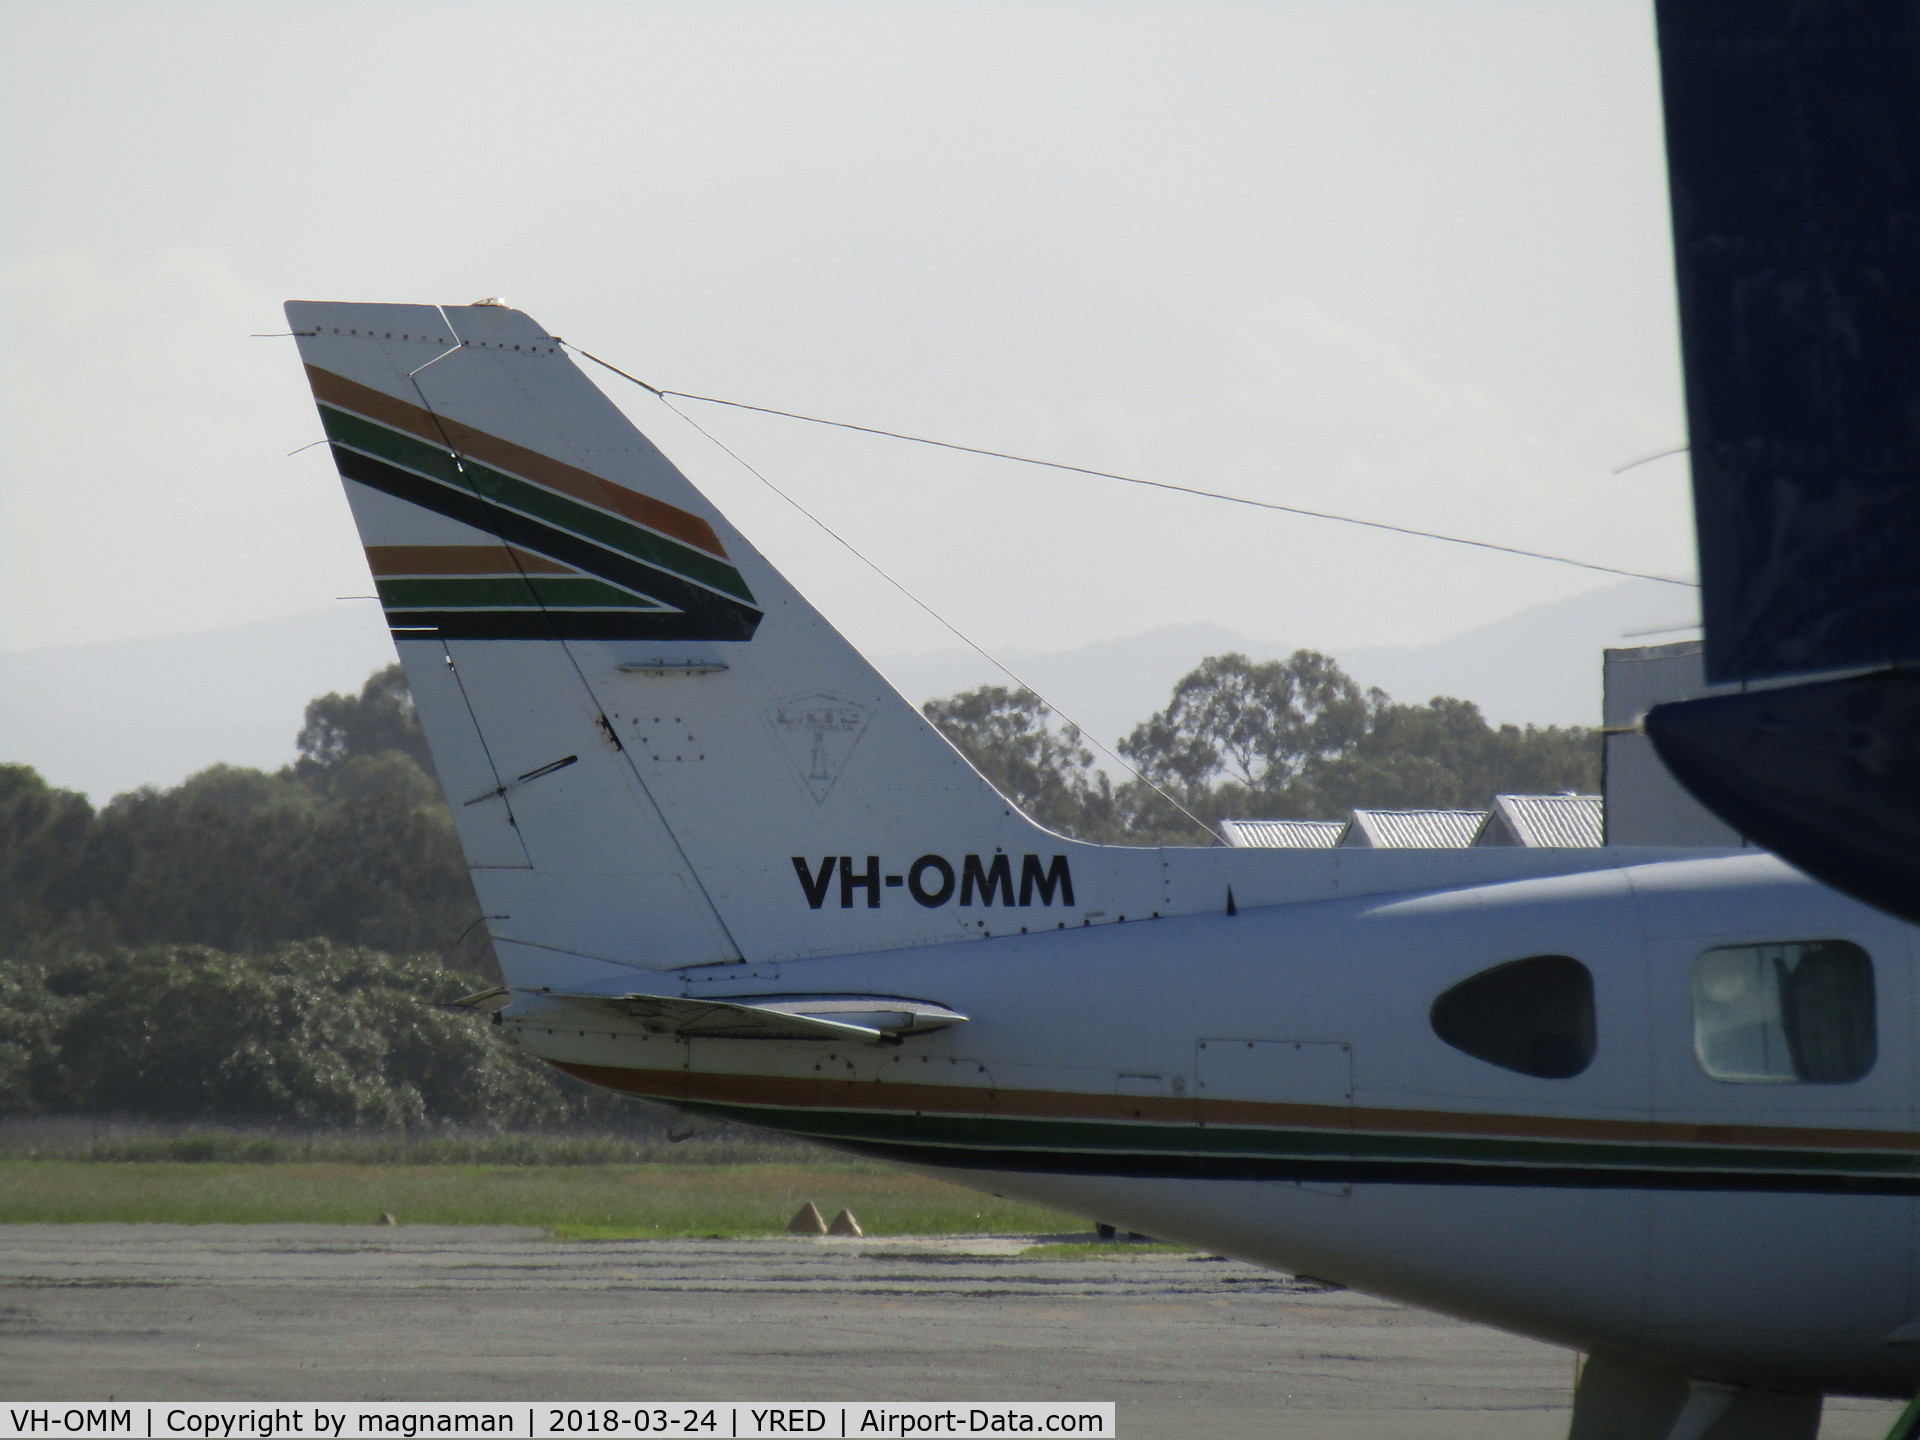 VH-OMM, 1981 Piper PA-31-350 Chieftain C/N 31-8152153, calm plane